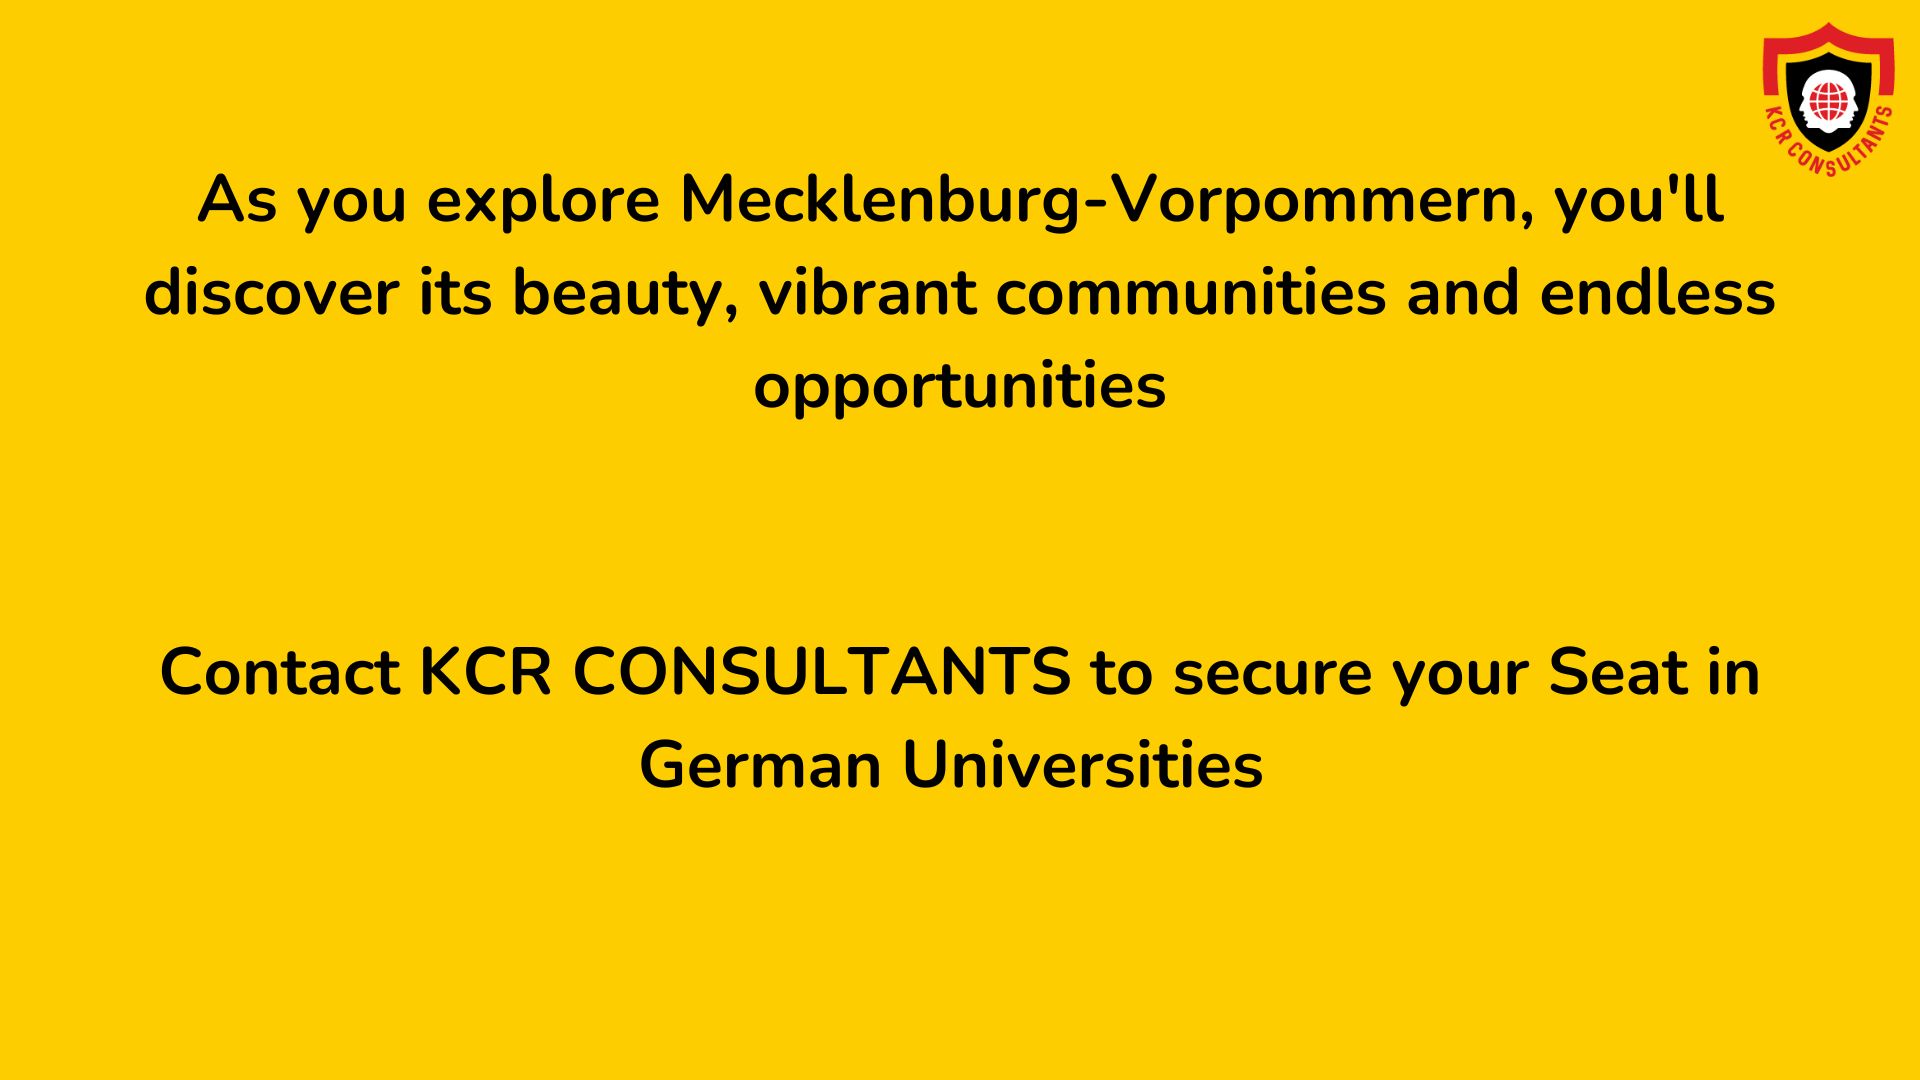 MECKLENBURG-VORPOMMERN - KCR CONSULTANTS - Contact us